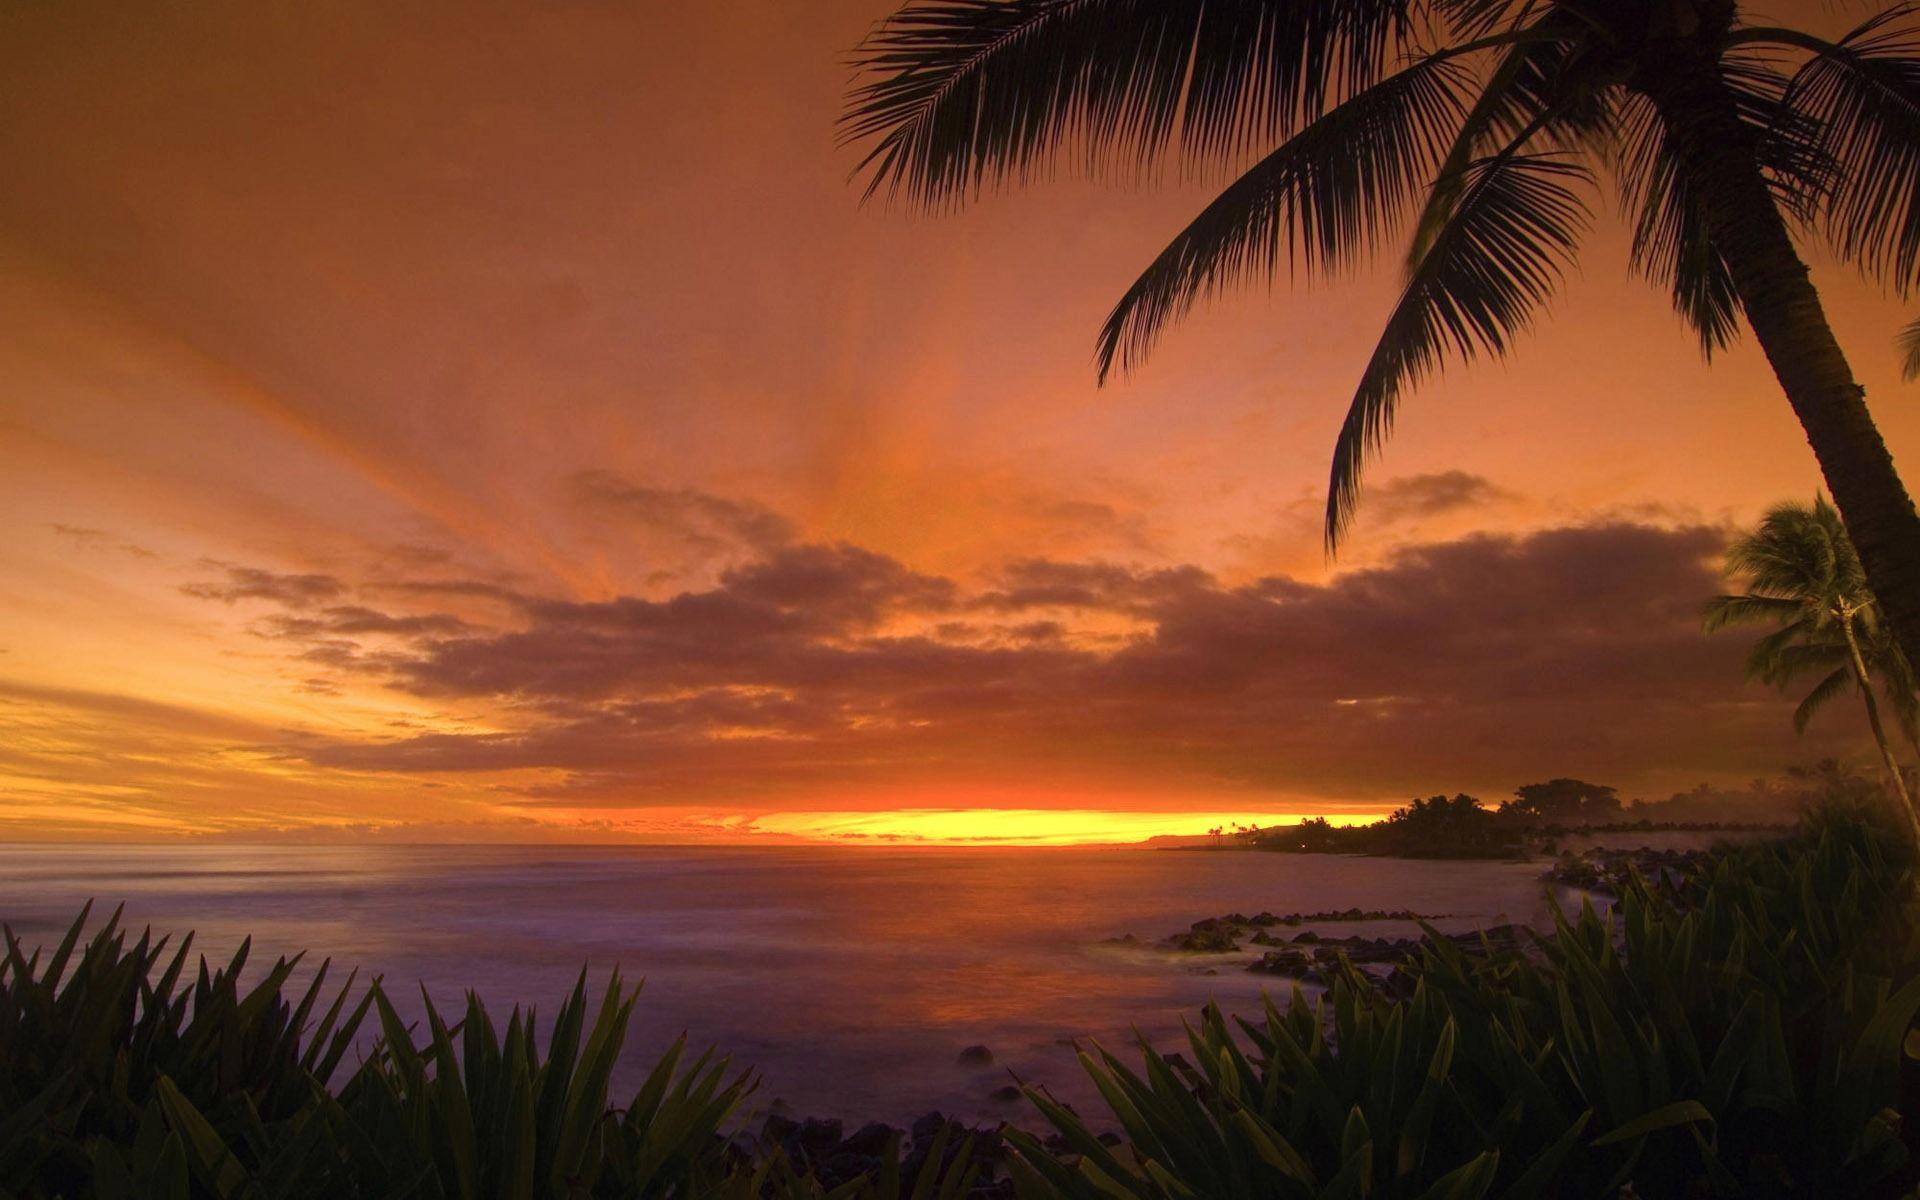 Tropical Sunset Wallpaper Landscape Nature Wallpaper in jpg format